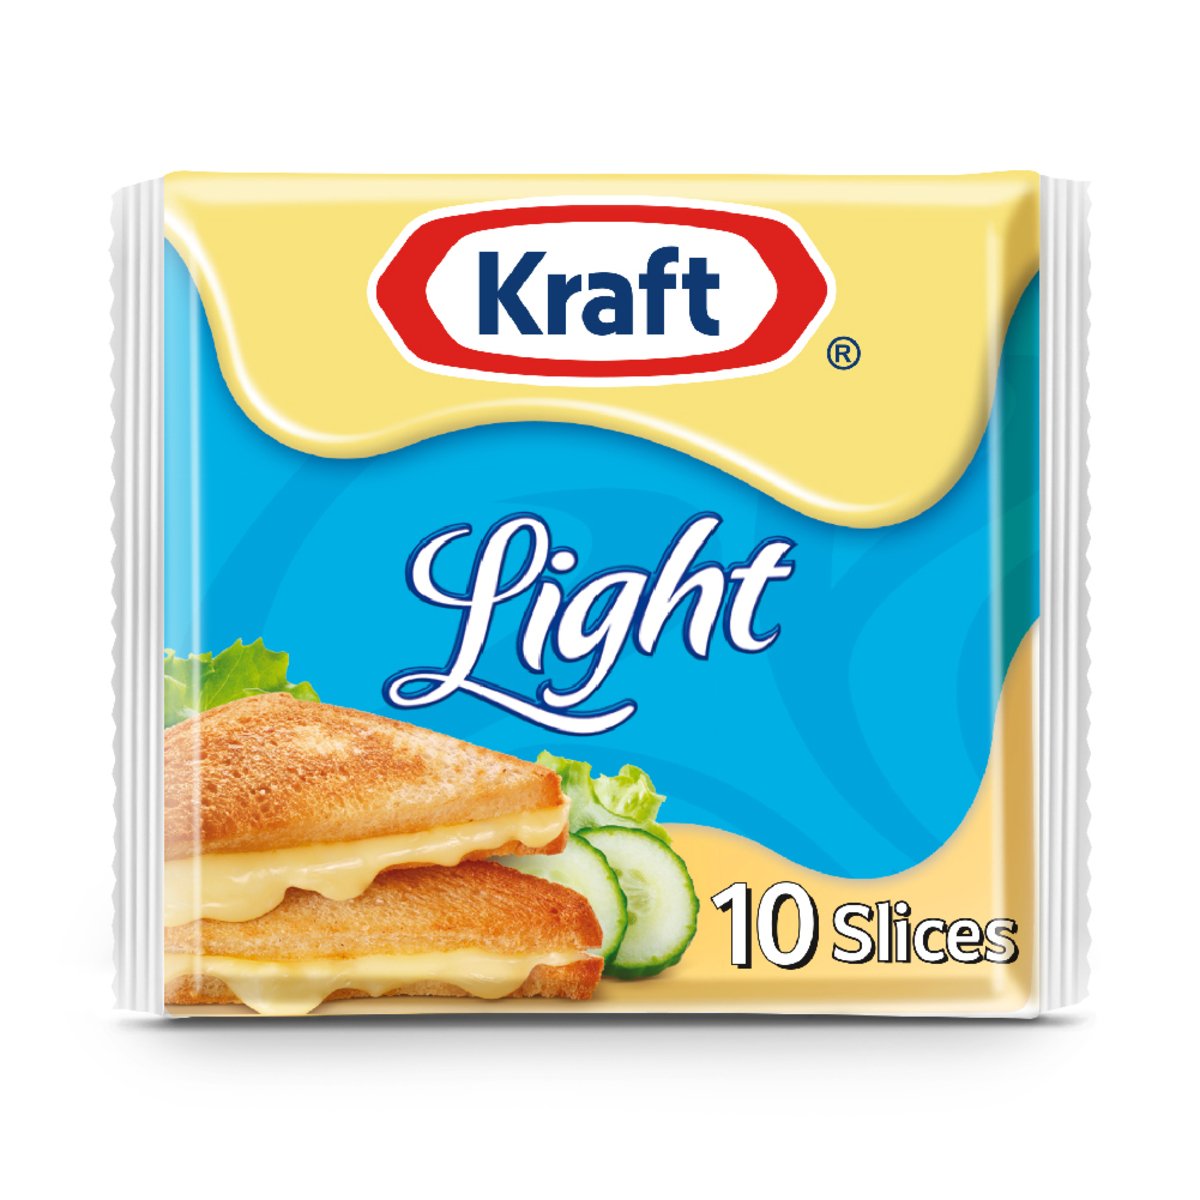 Kraft Cheese Slices Light 200g